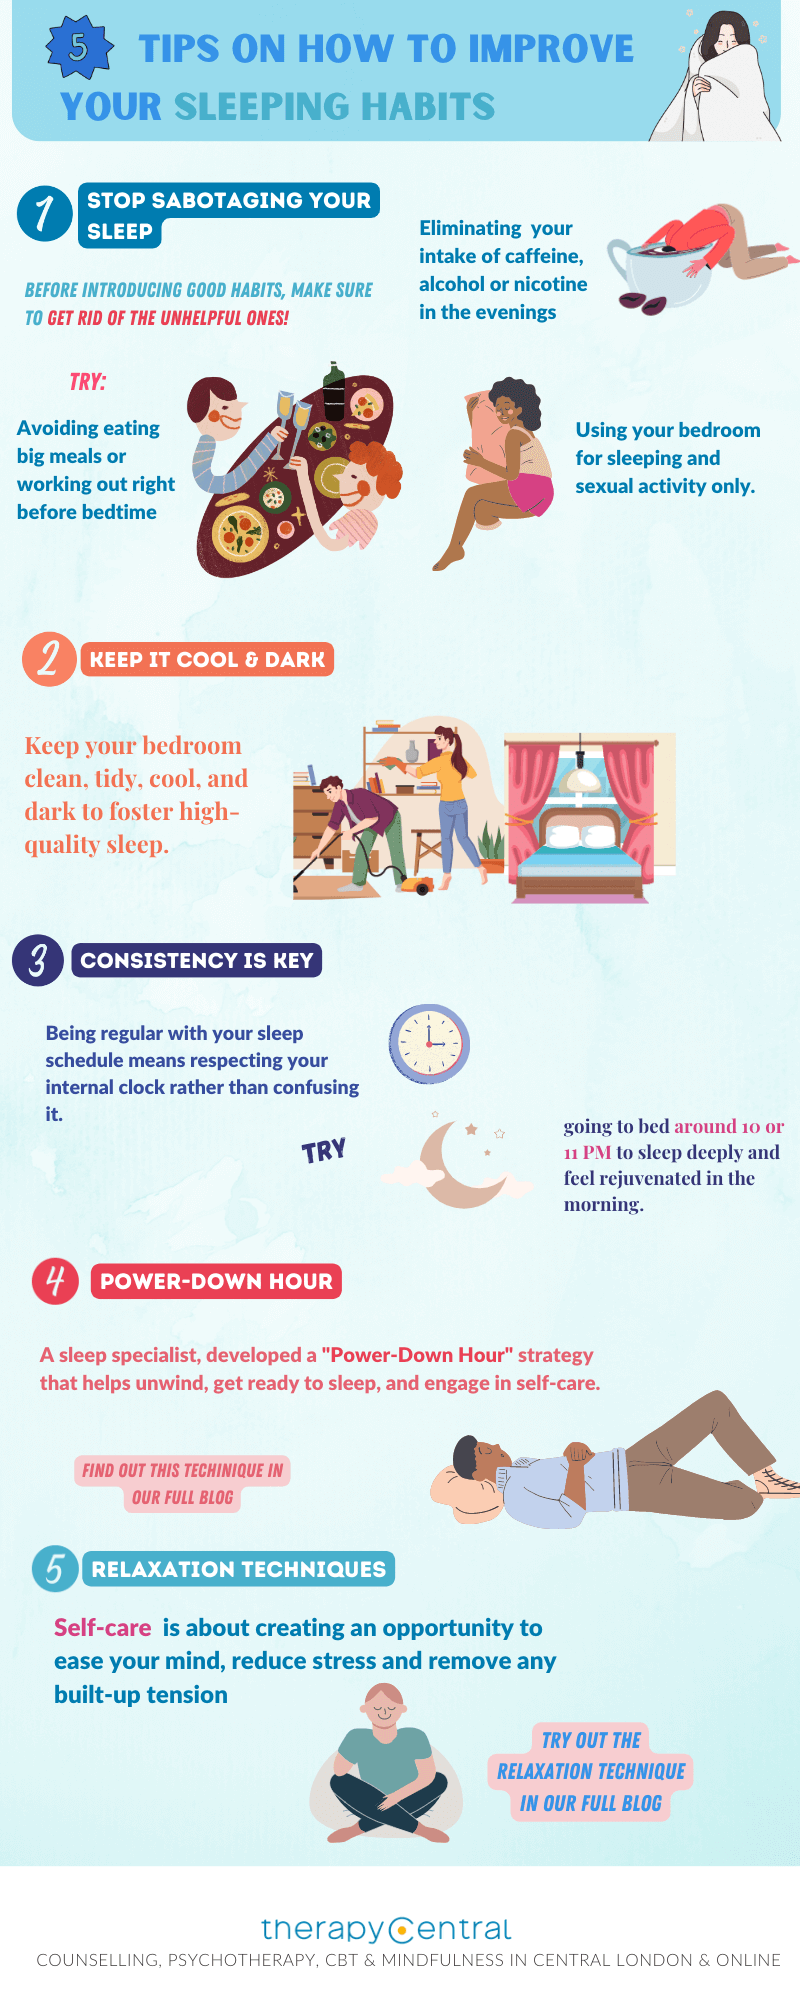 How To Improve My Sleeping Habits - 5 Tips